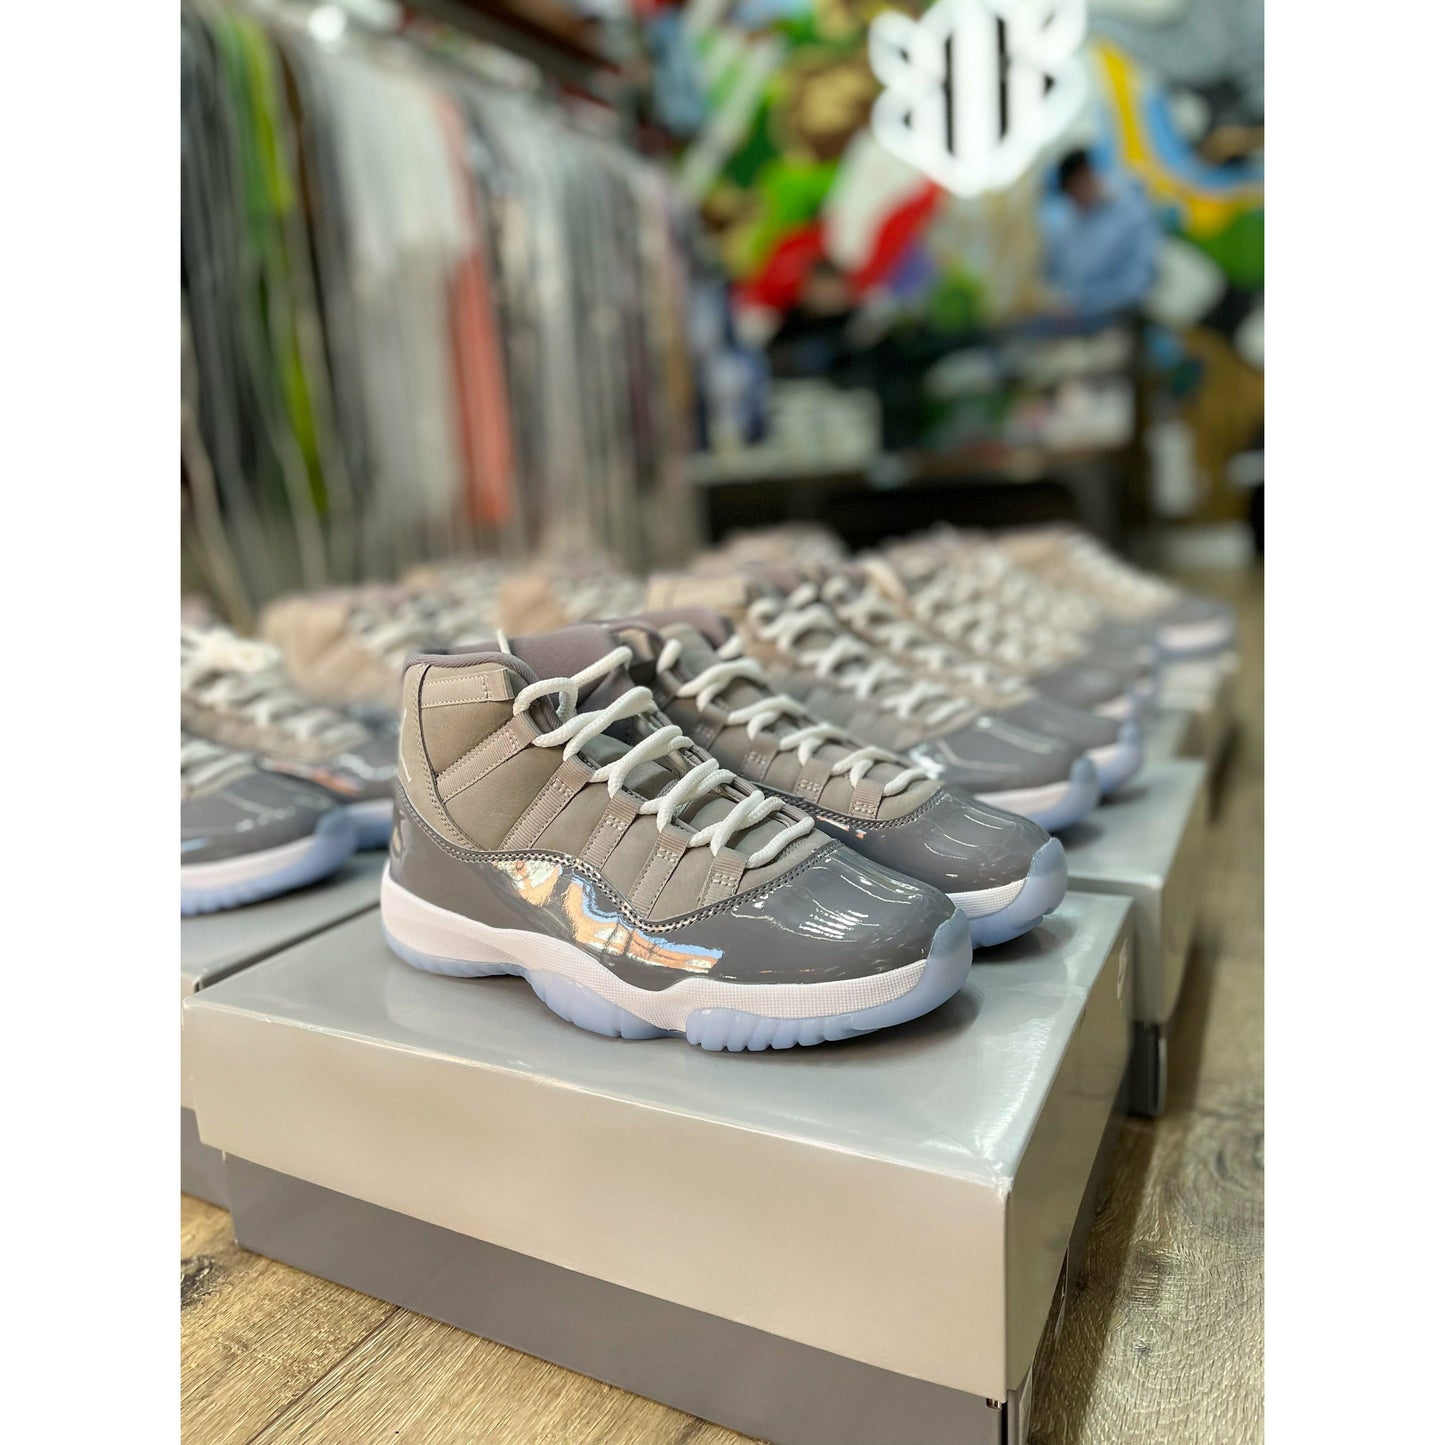 Jordan 11 Retro Cool Grey (2021) from Jordan's